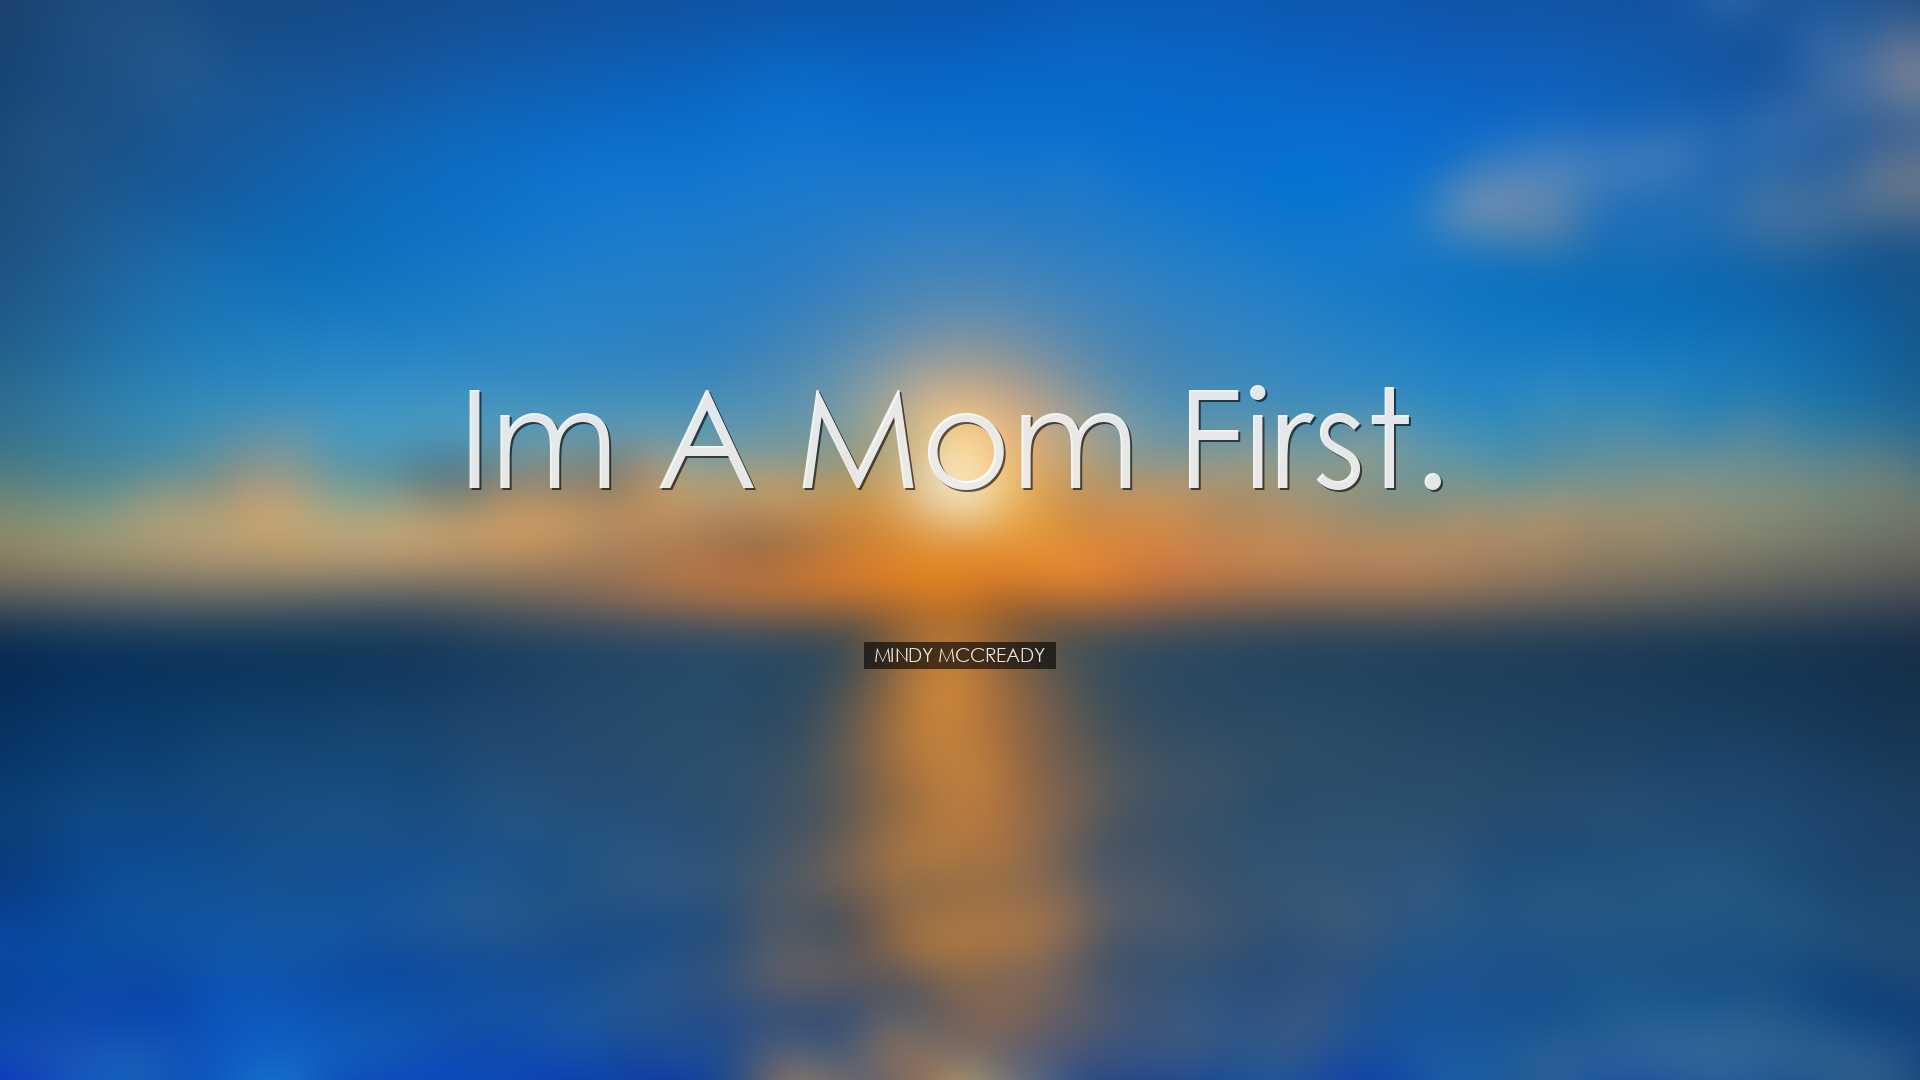 Im a mom first. - Mindy McCready